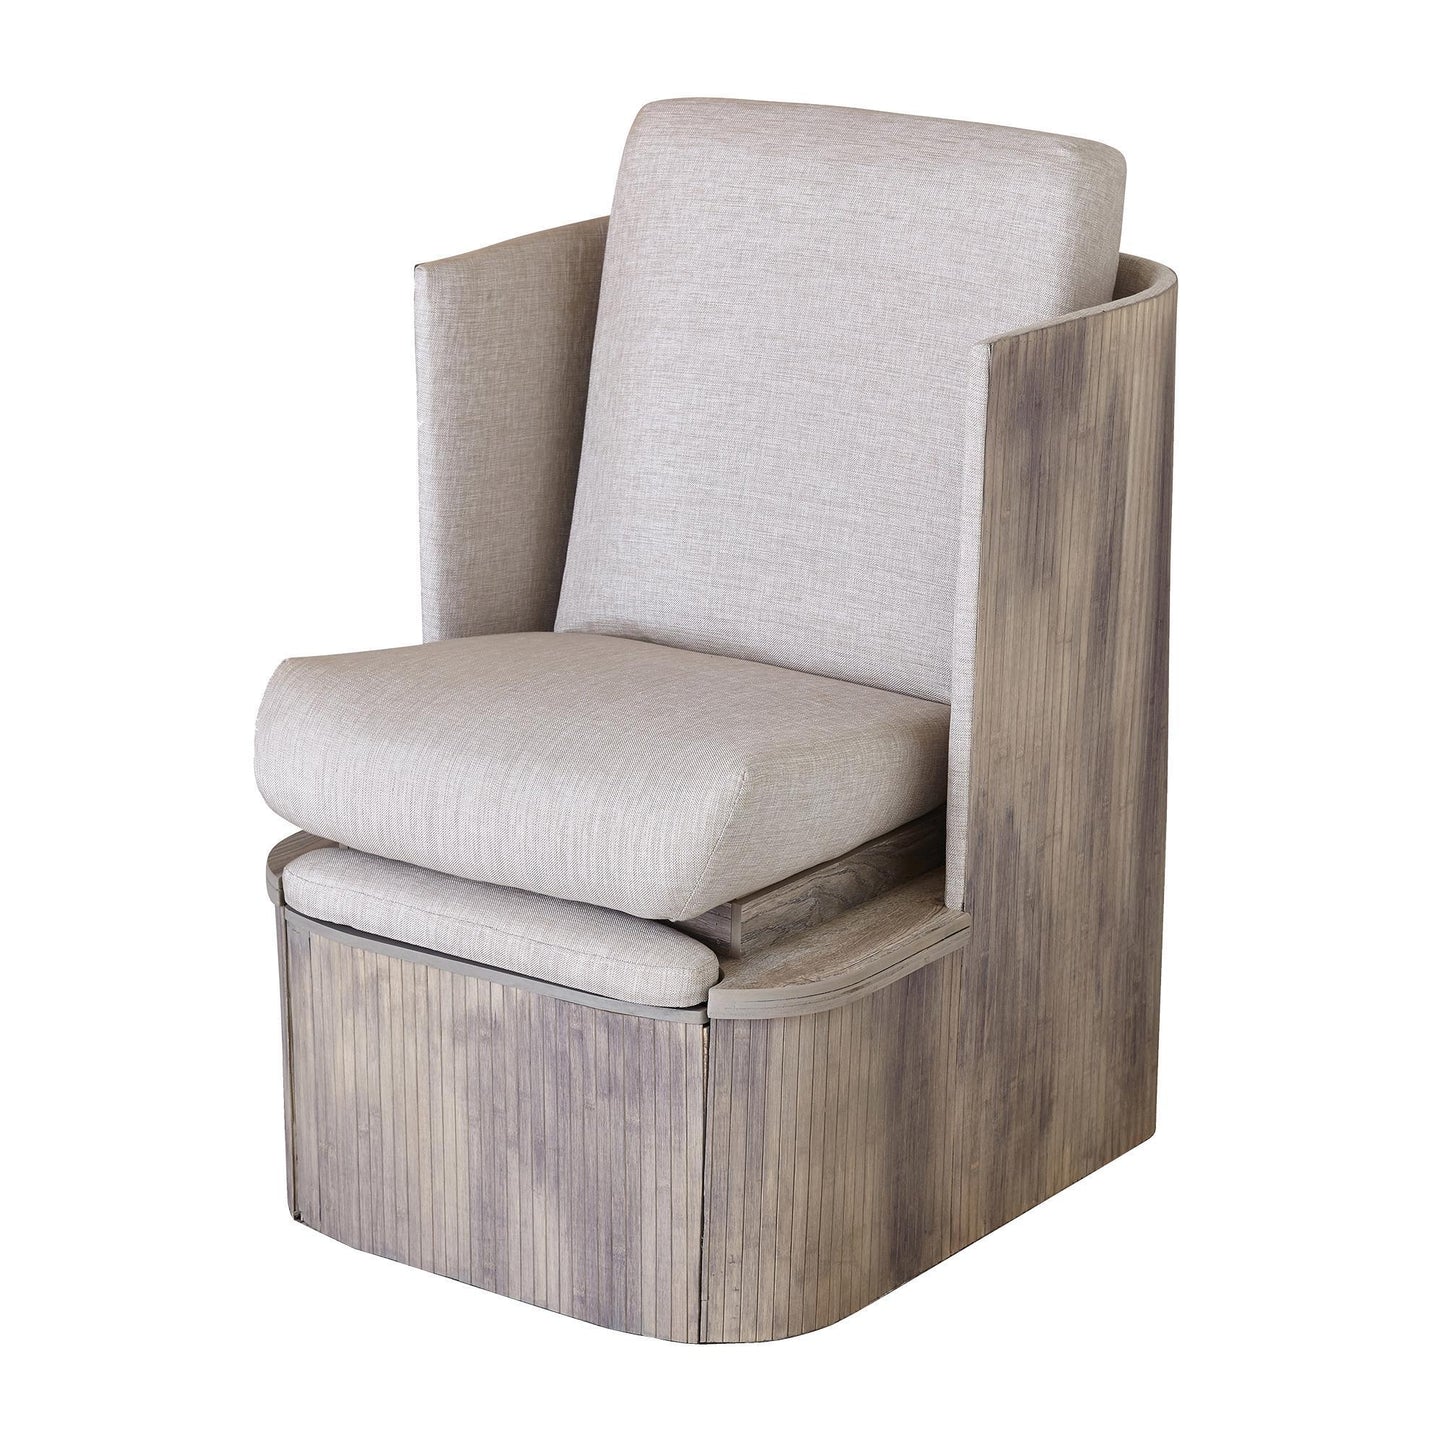 Pedicure Chairs & Spas Belava Dorset Pedicure Spa Chair - Lounge Style